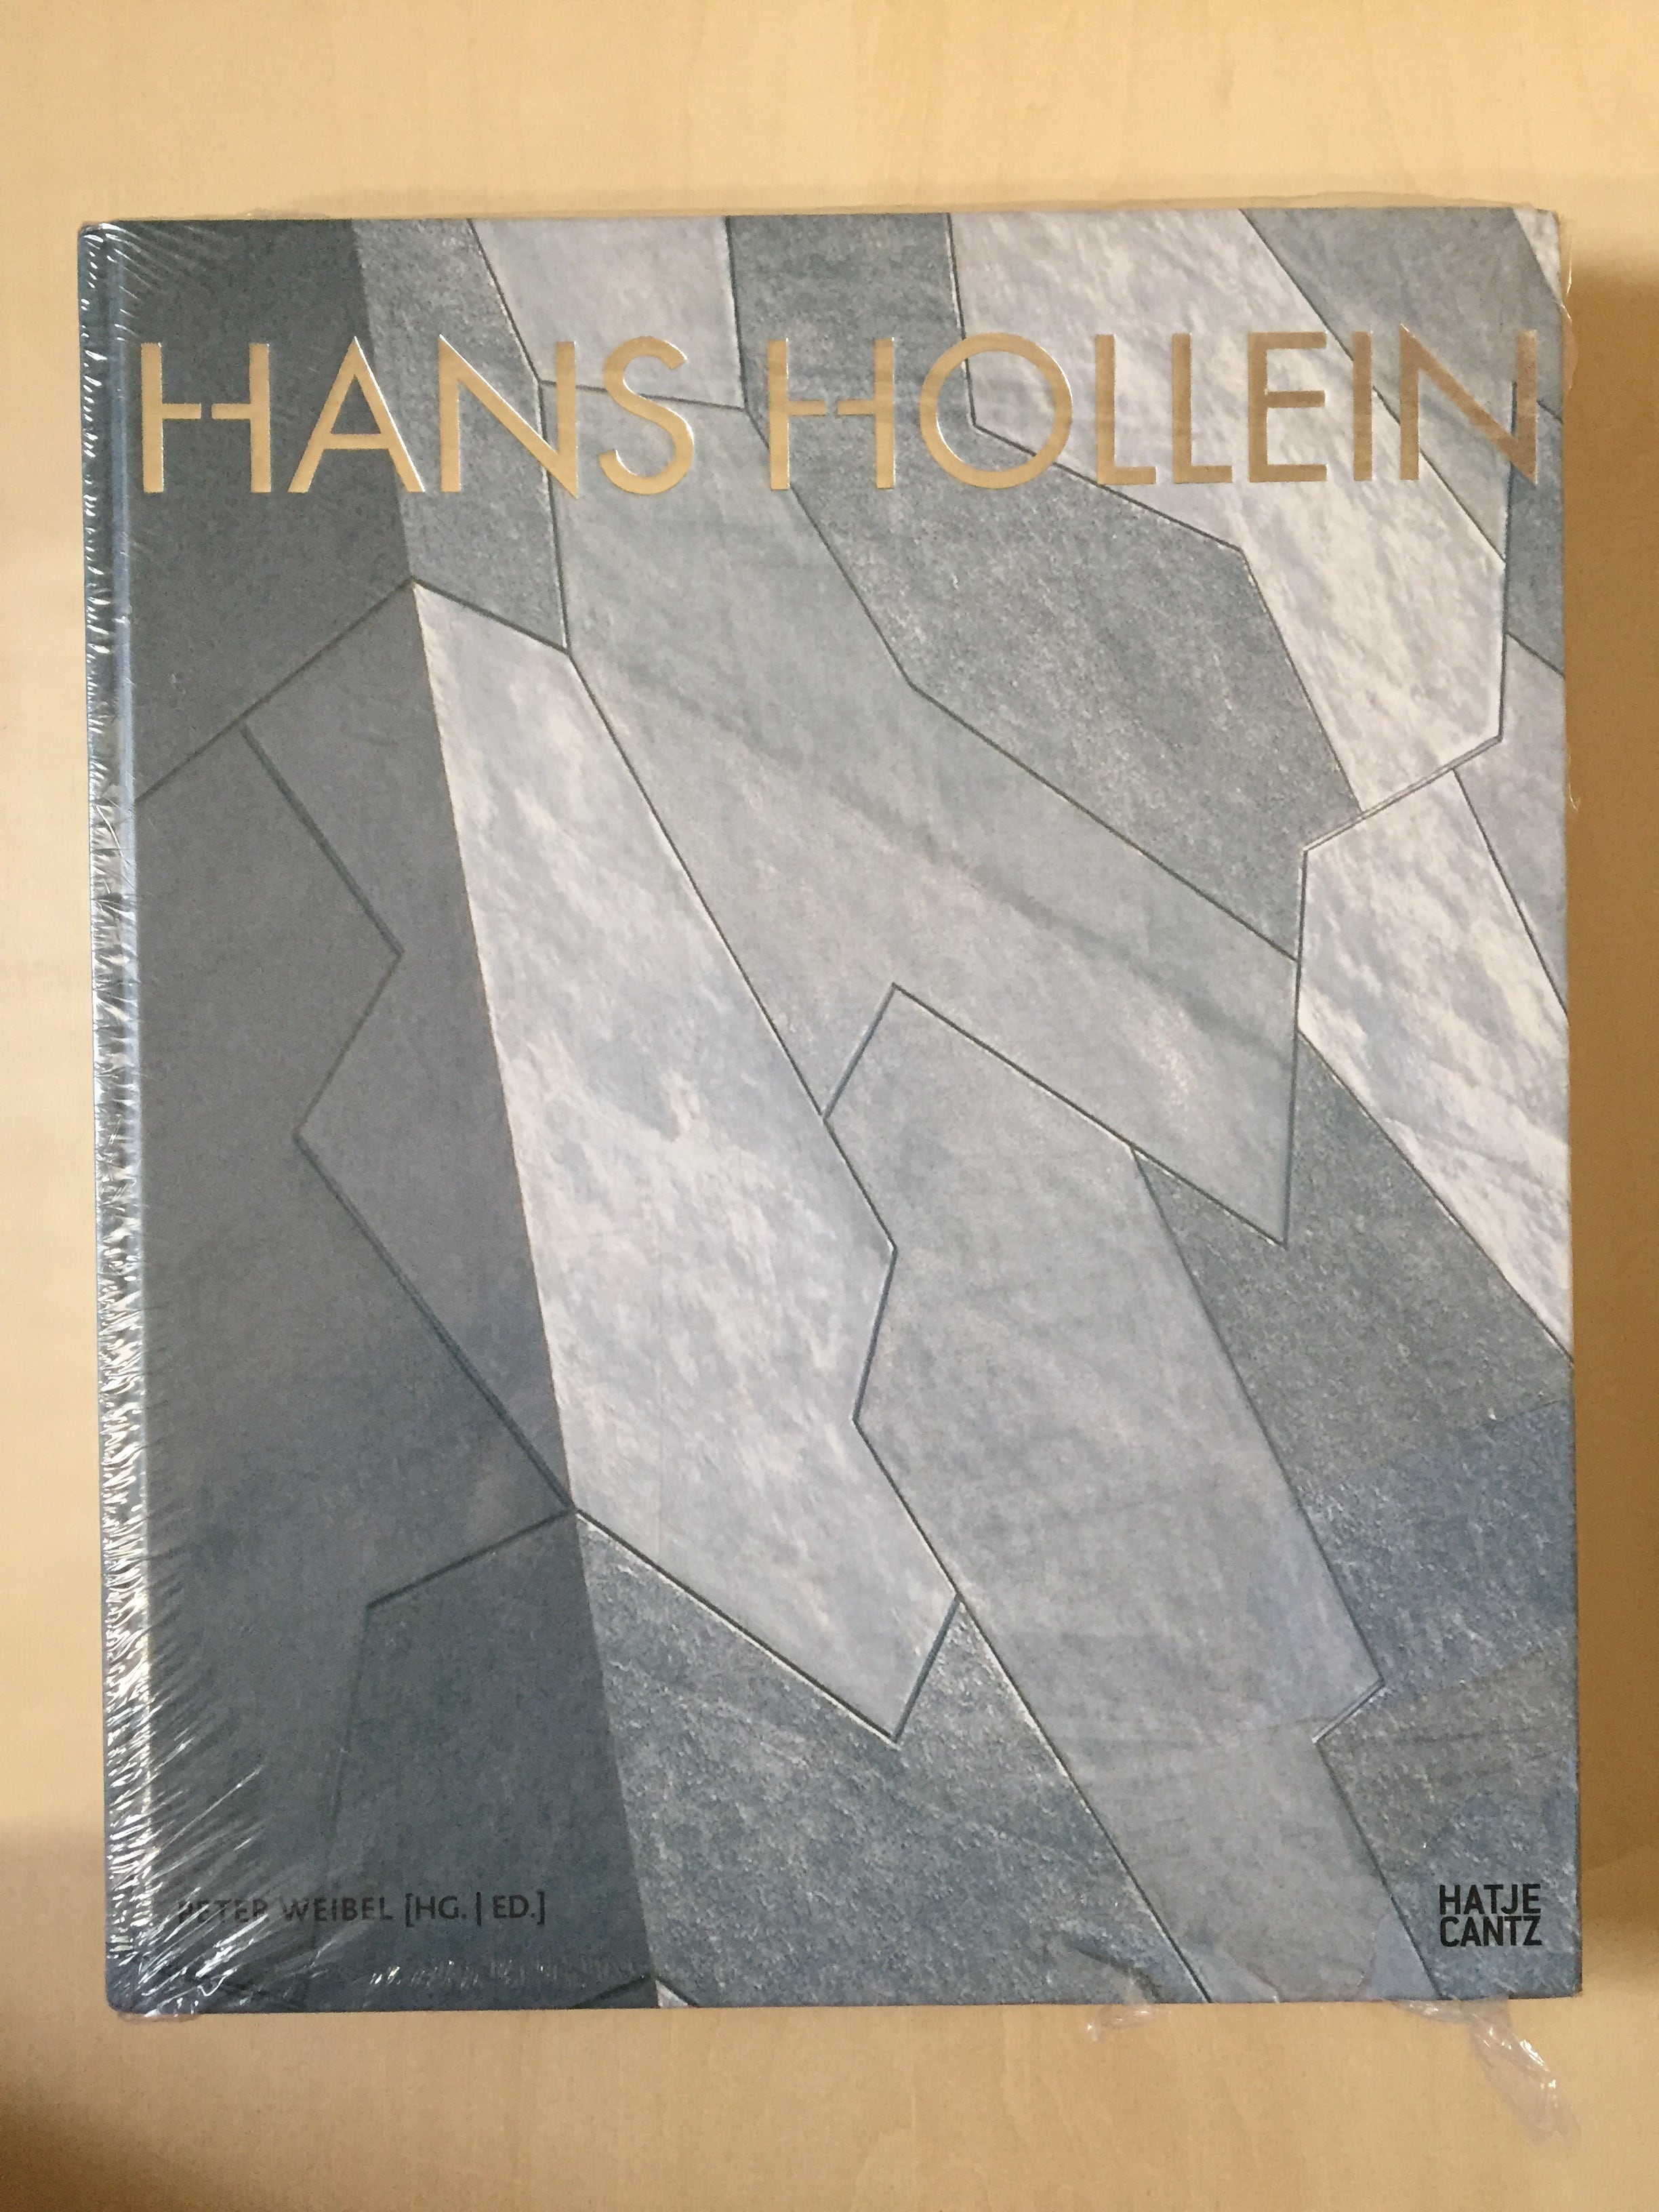 Hans Hollein by: Peter Weibel 9783775732574 9783775732574